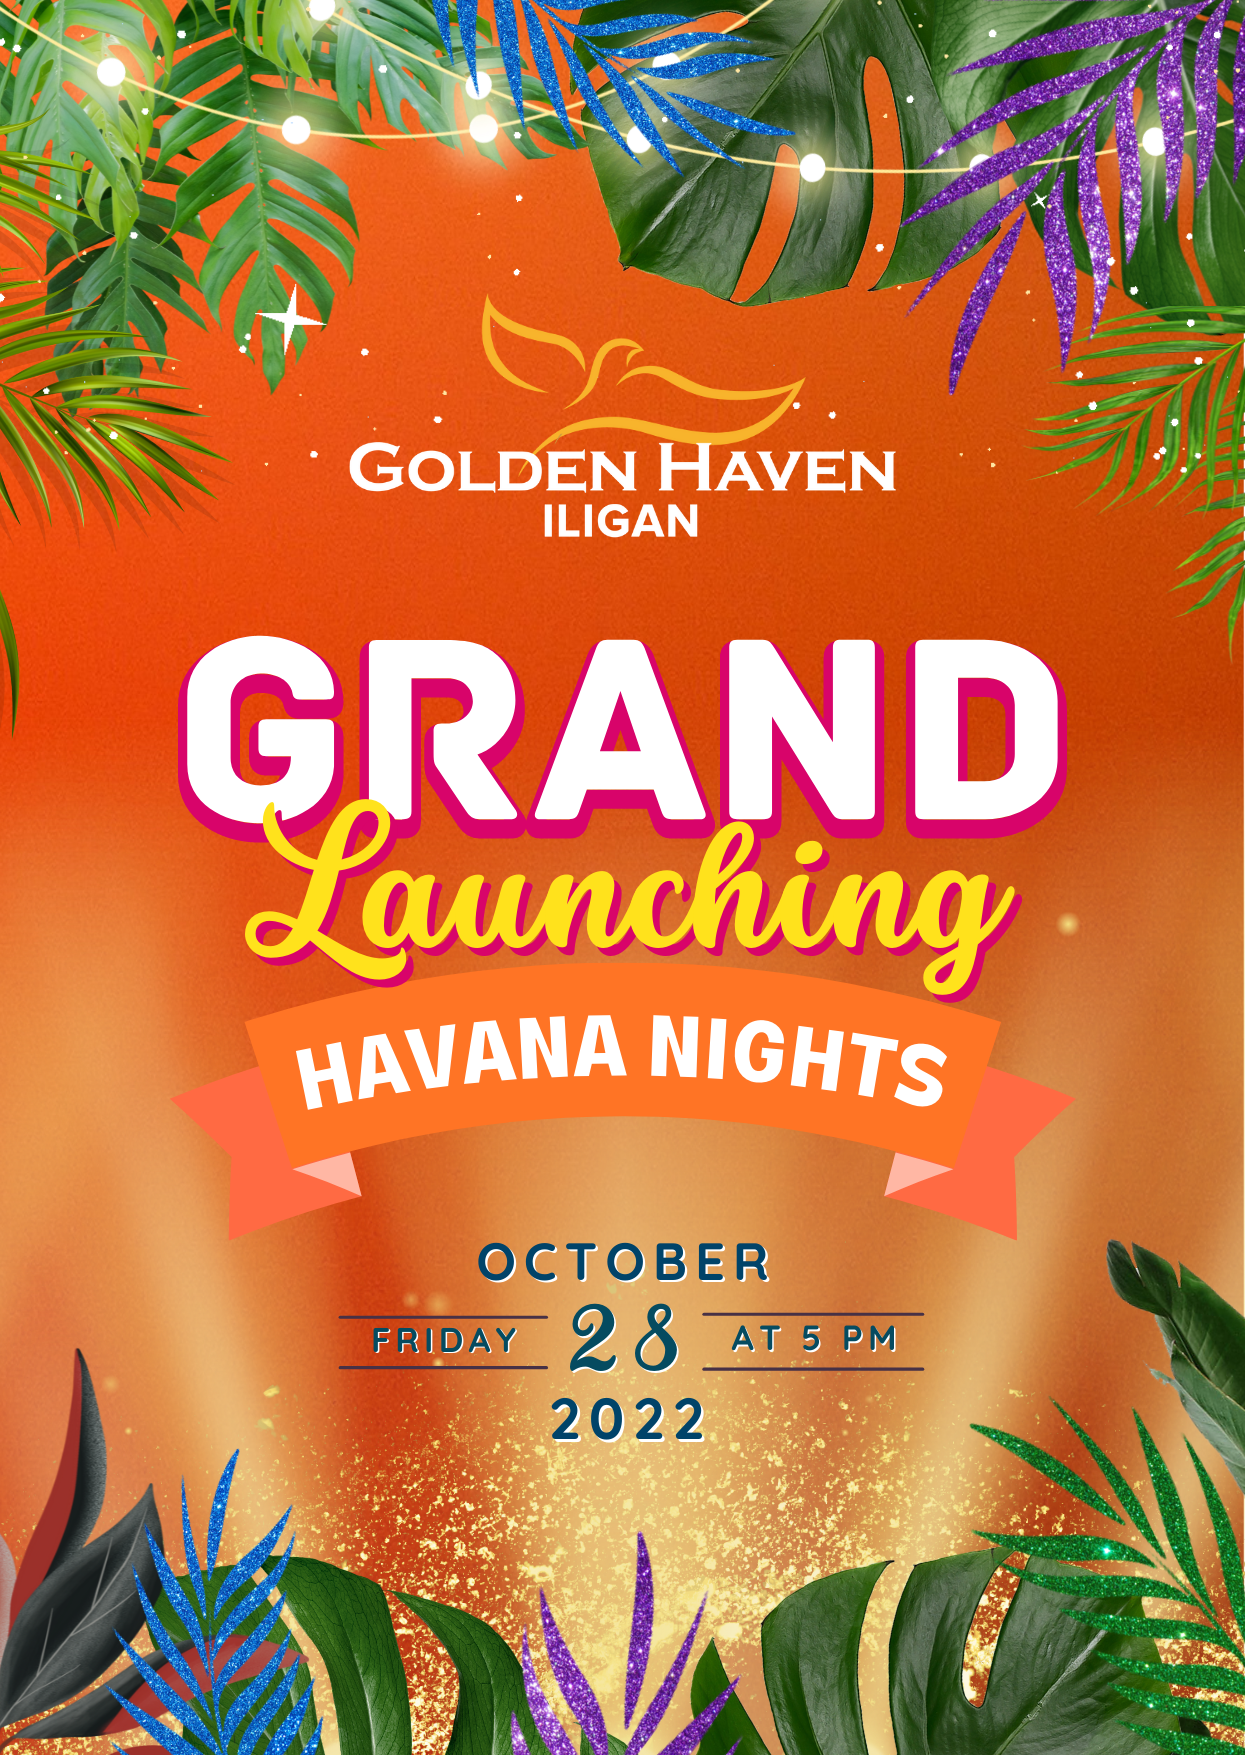 Golden Haven Iligan Grand Launching